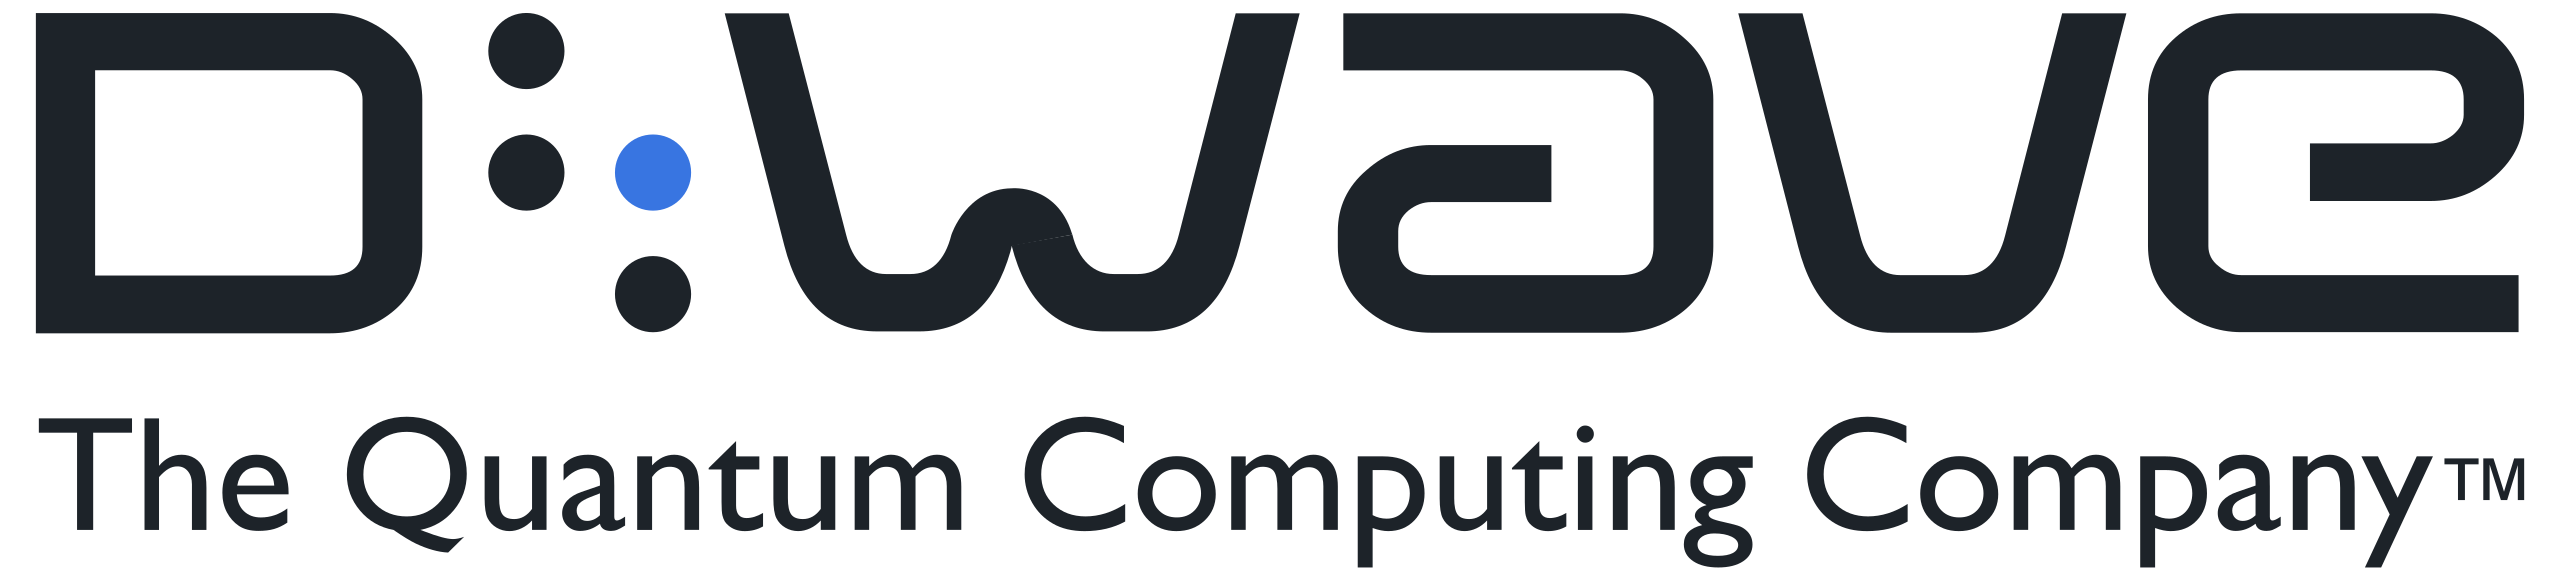 dwave logo